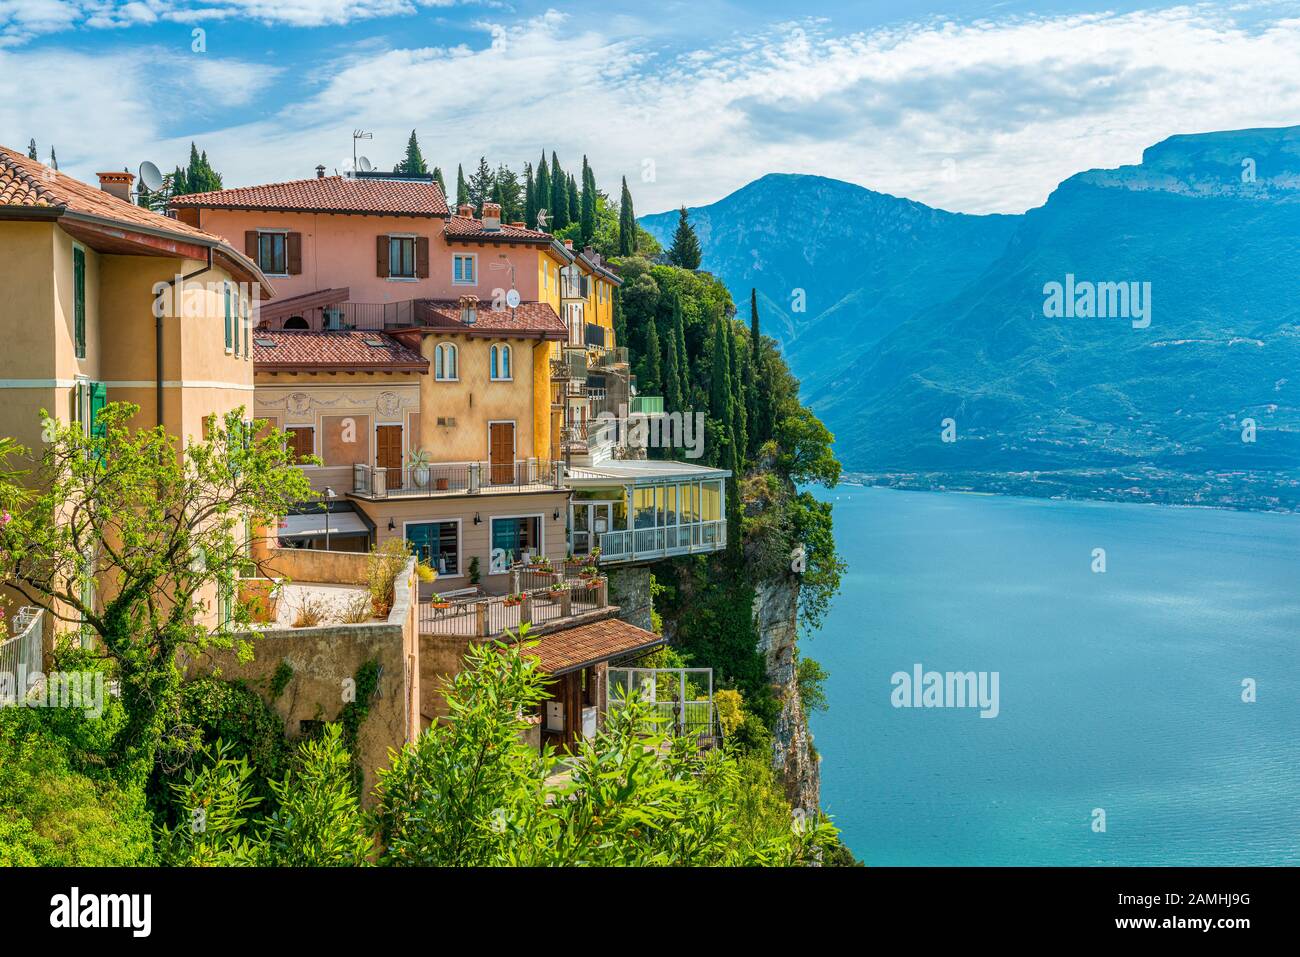 Scenic sight in Tremosine sul Garda, village on Lake Garda, in the Province of Brescia, Lombardy, Italy. Stock Photo